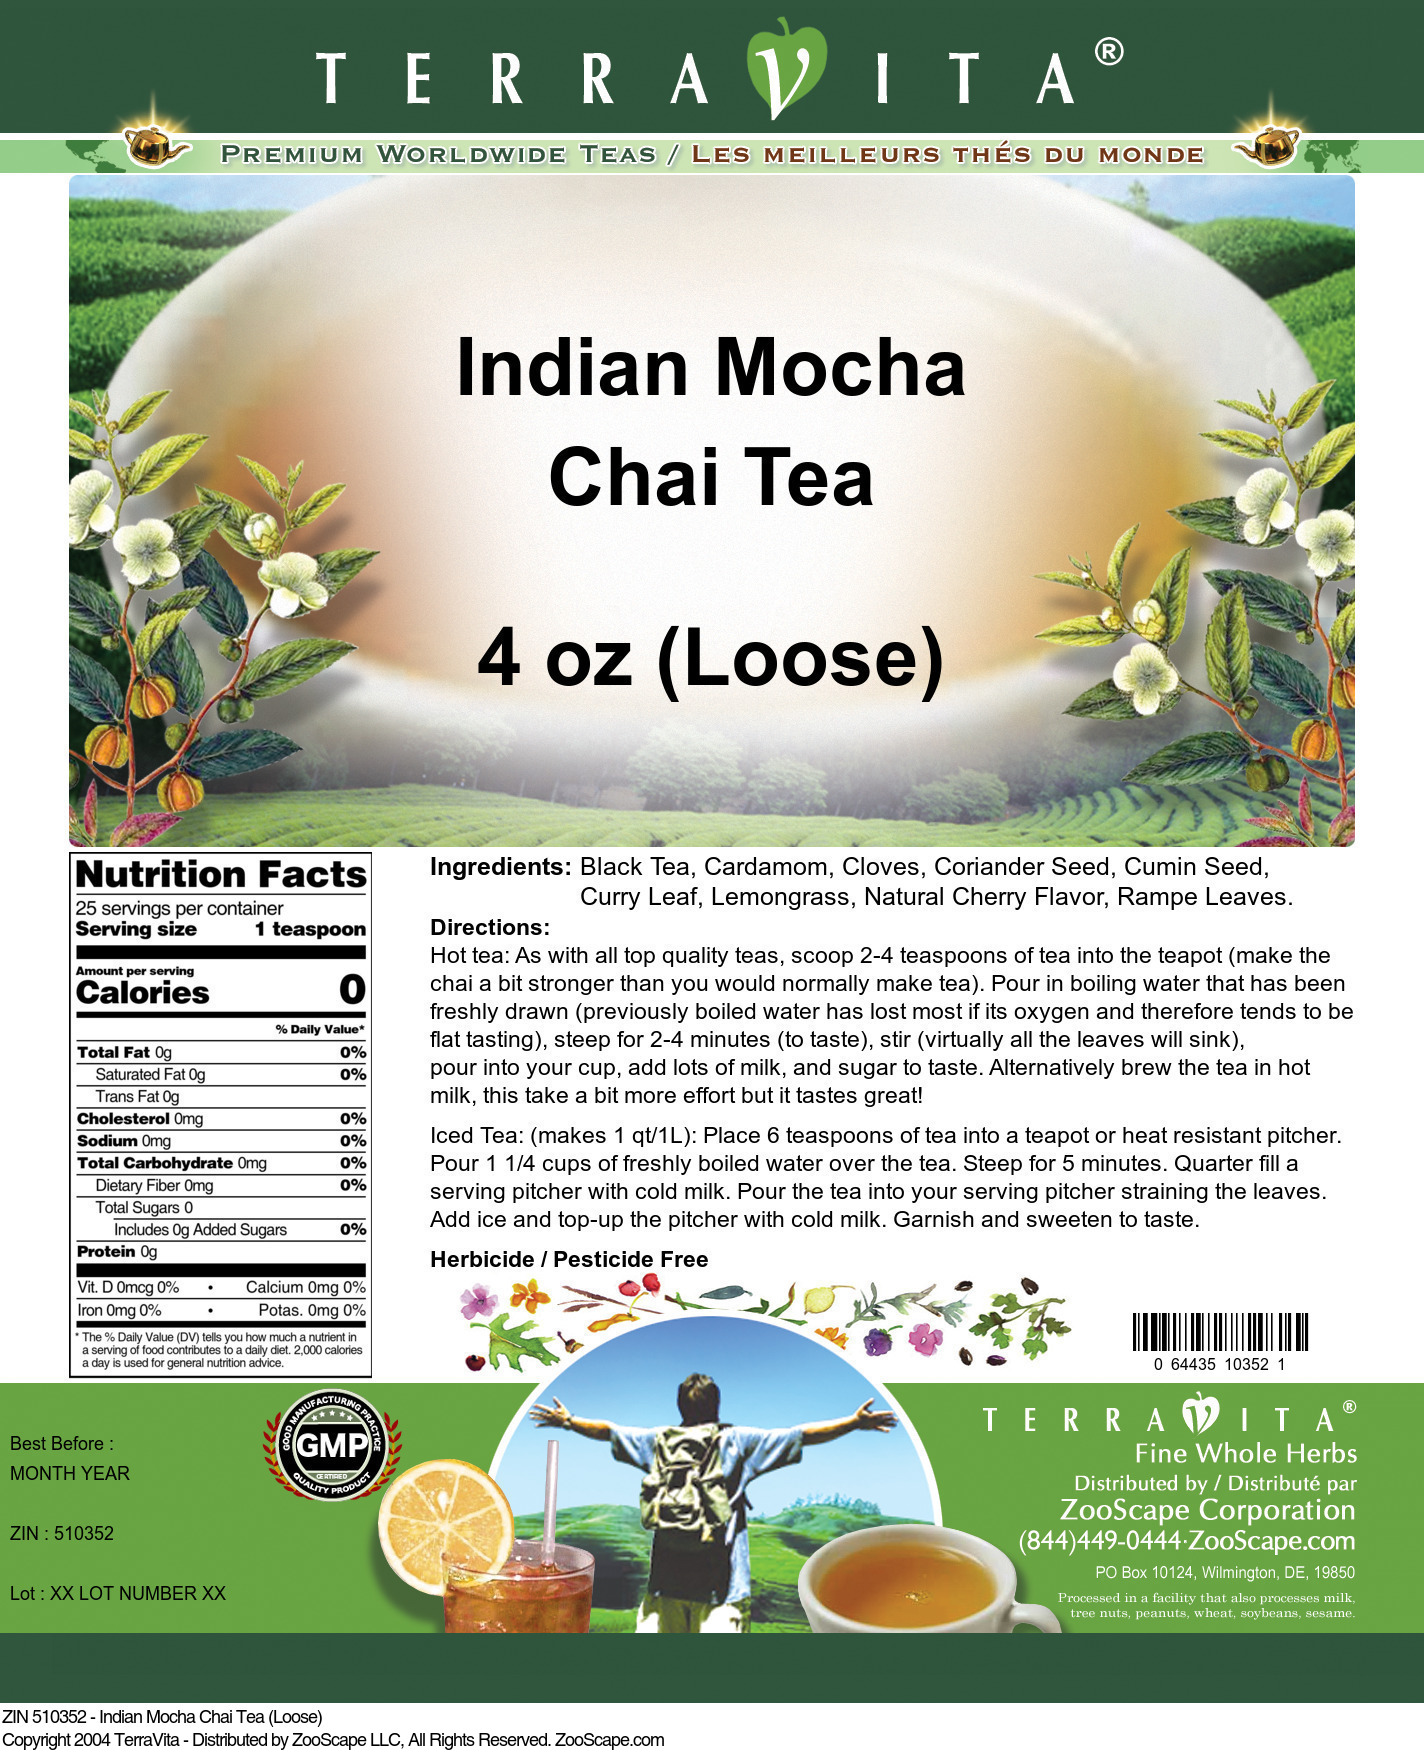 Indian Mocha Chai Tea (Loose) - Label